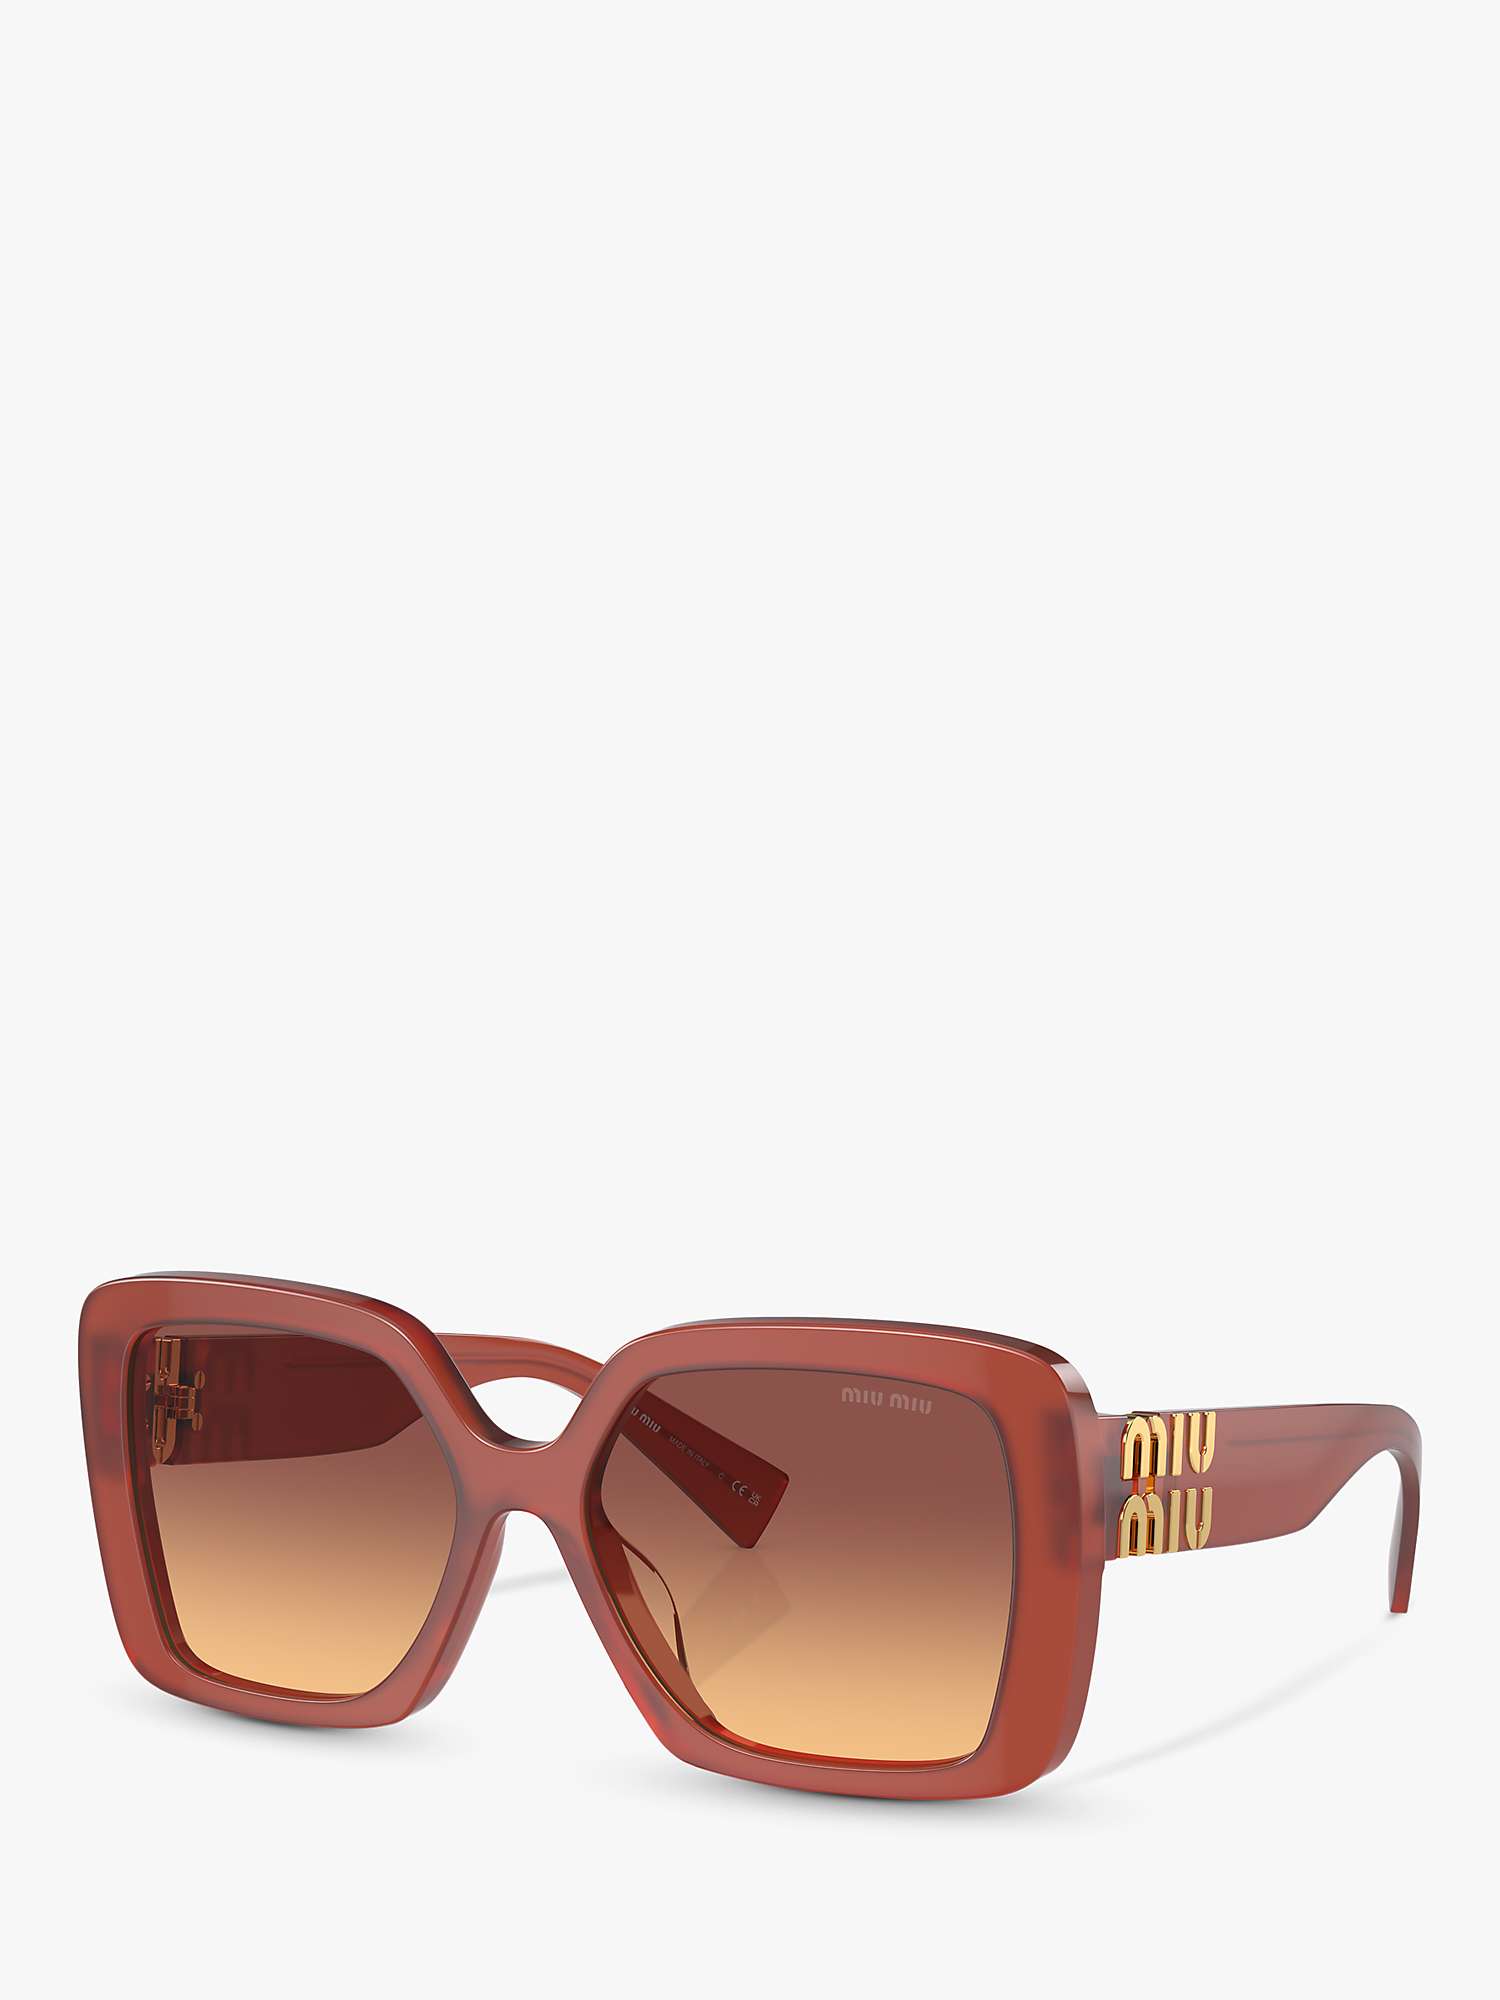 Buy Miu Miu MU 10YS Women's Chunky Square Sunglasses, Cognac Opal/Brown Gradient Online at johnlewis.com